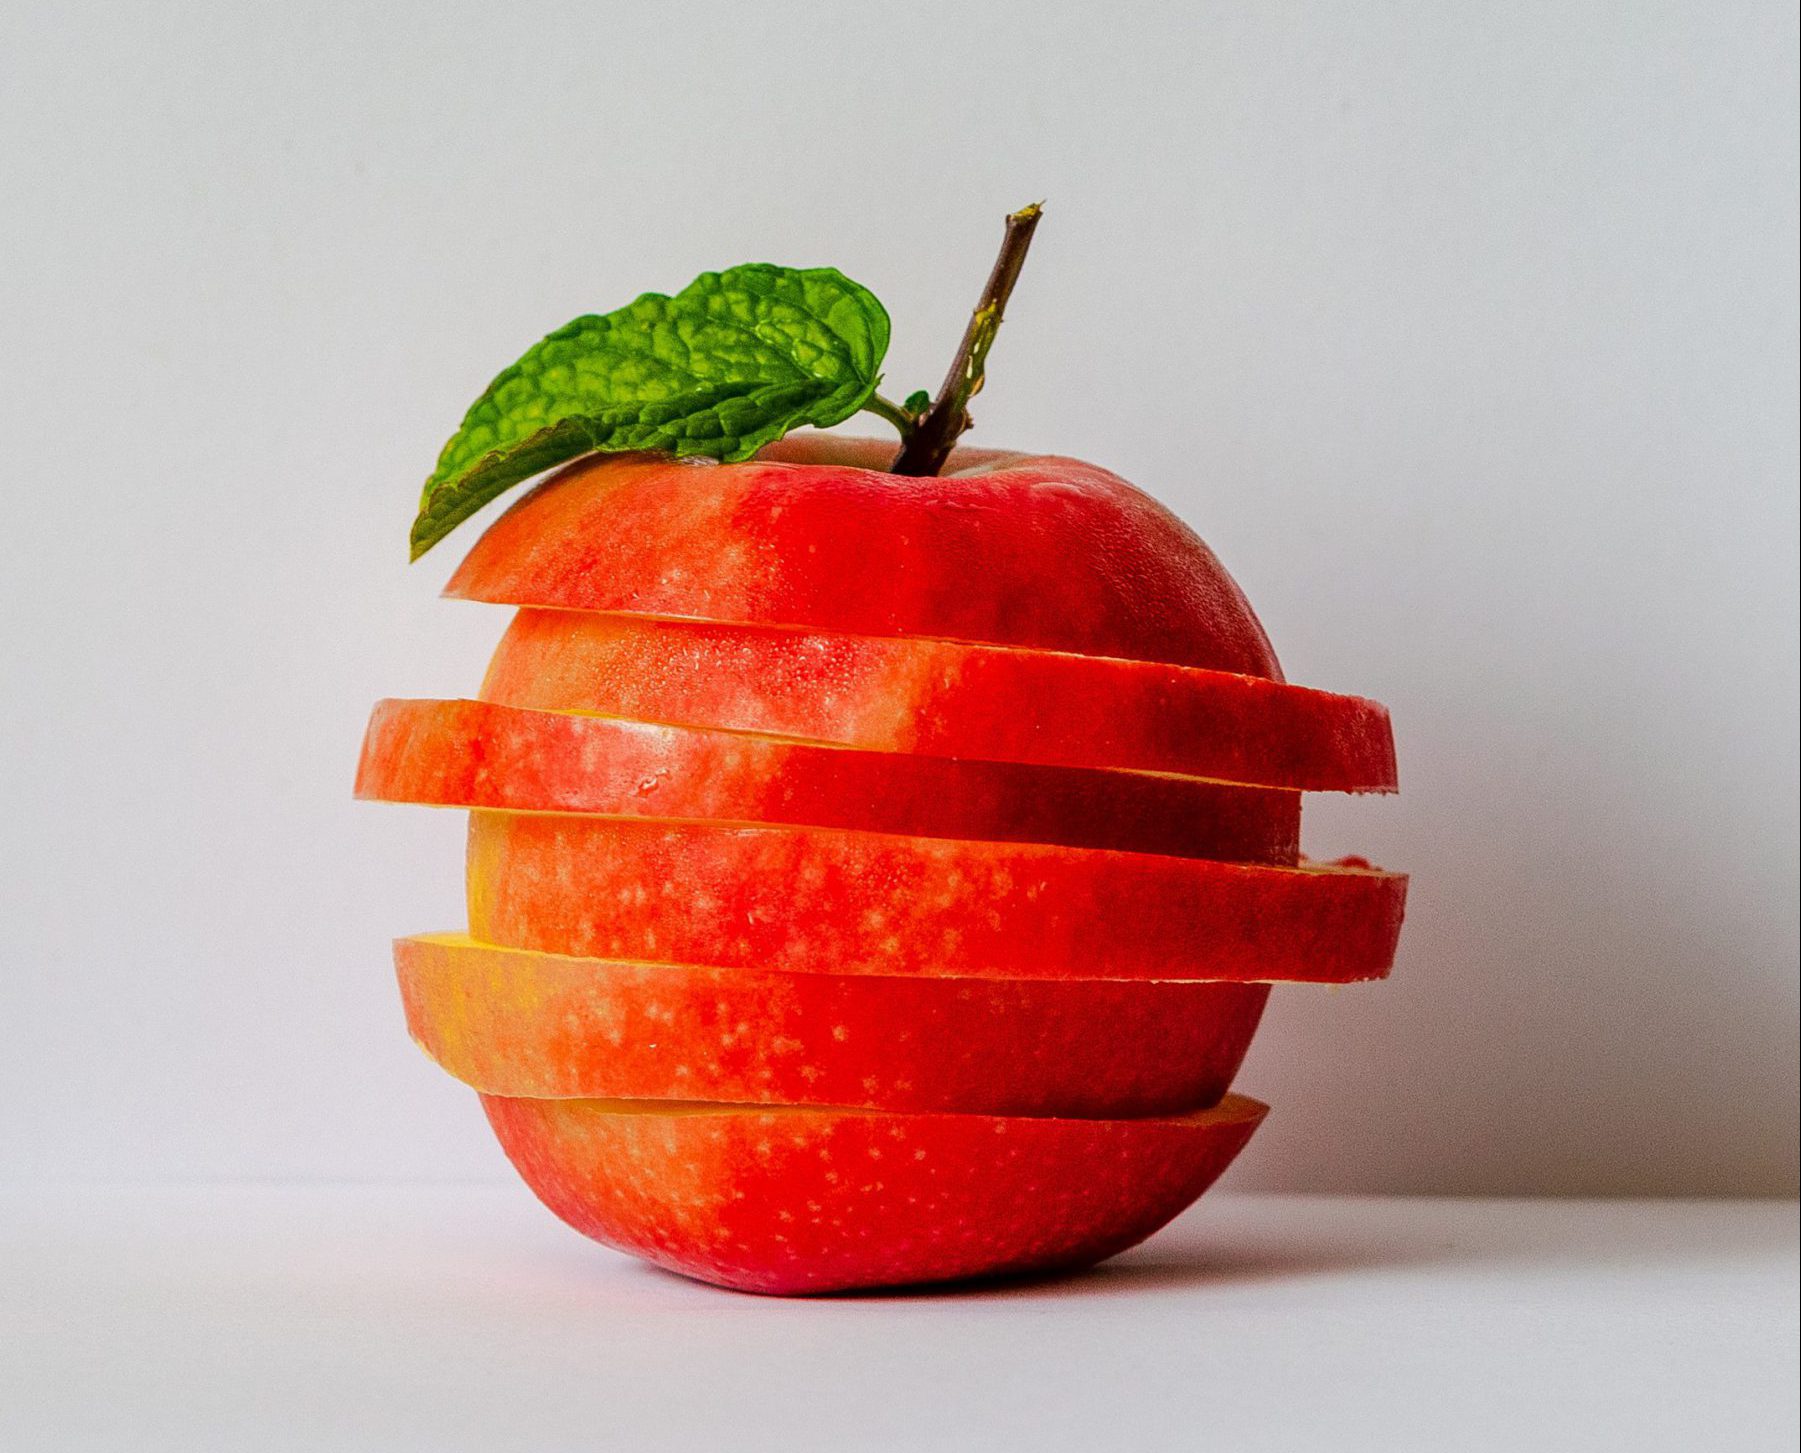 red apple sliced horizontally